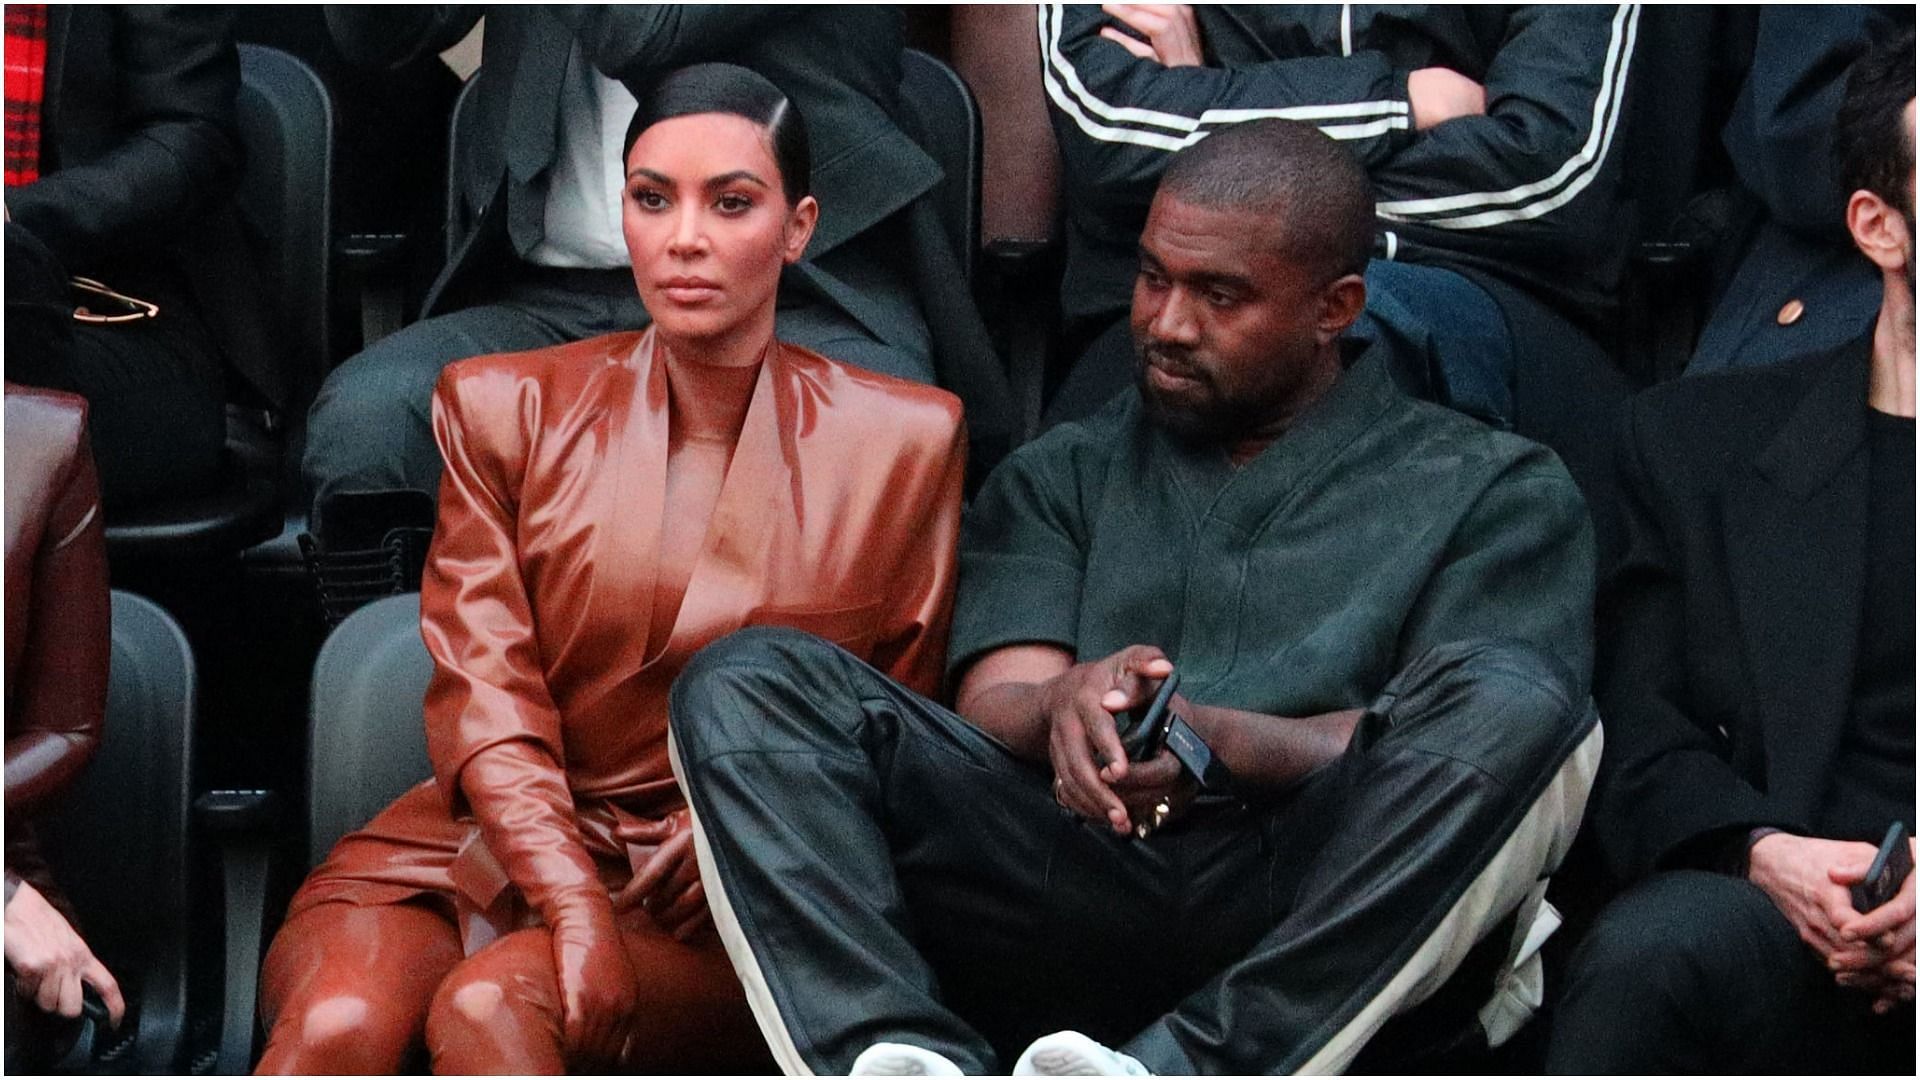 Kim Kardashian and Kanye West attend the Balenciaga show (Image via Pierre Suu/Getty Images)